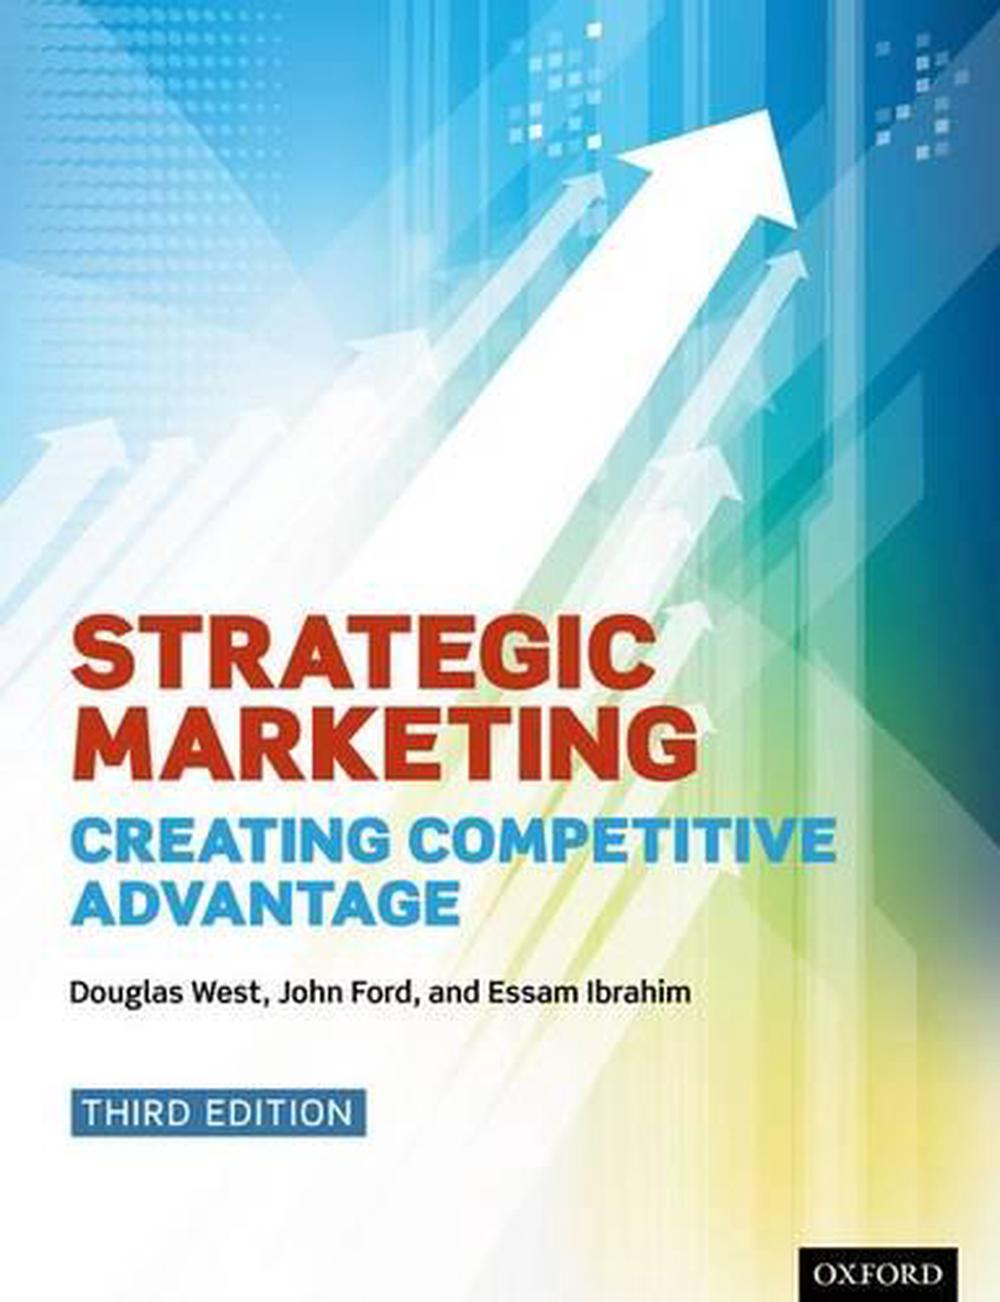 thesis strategic marketing